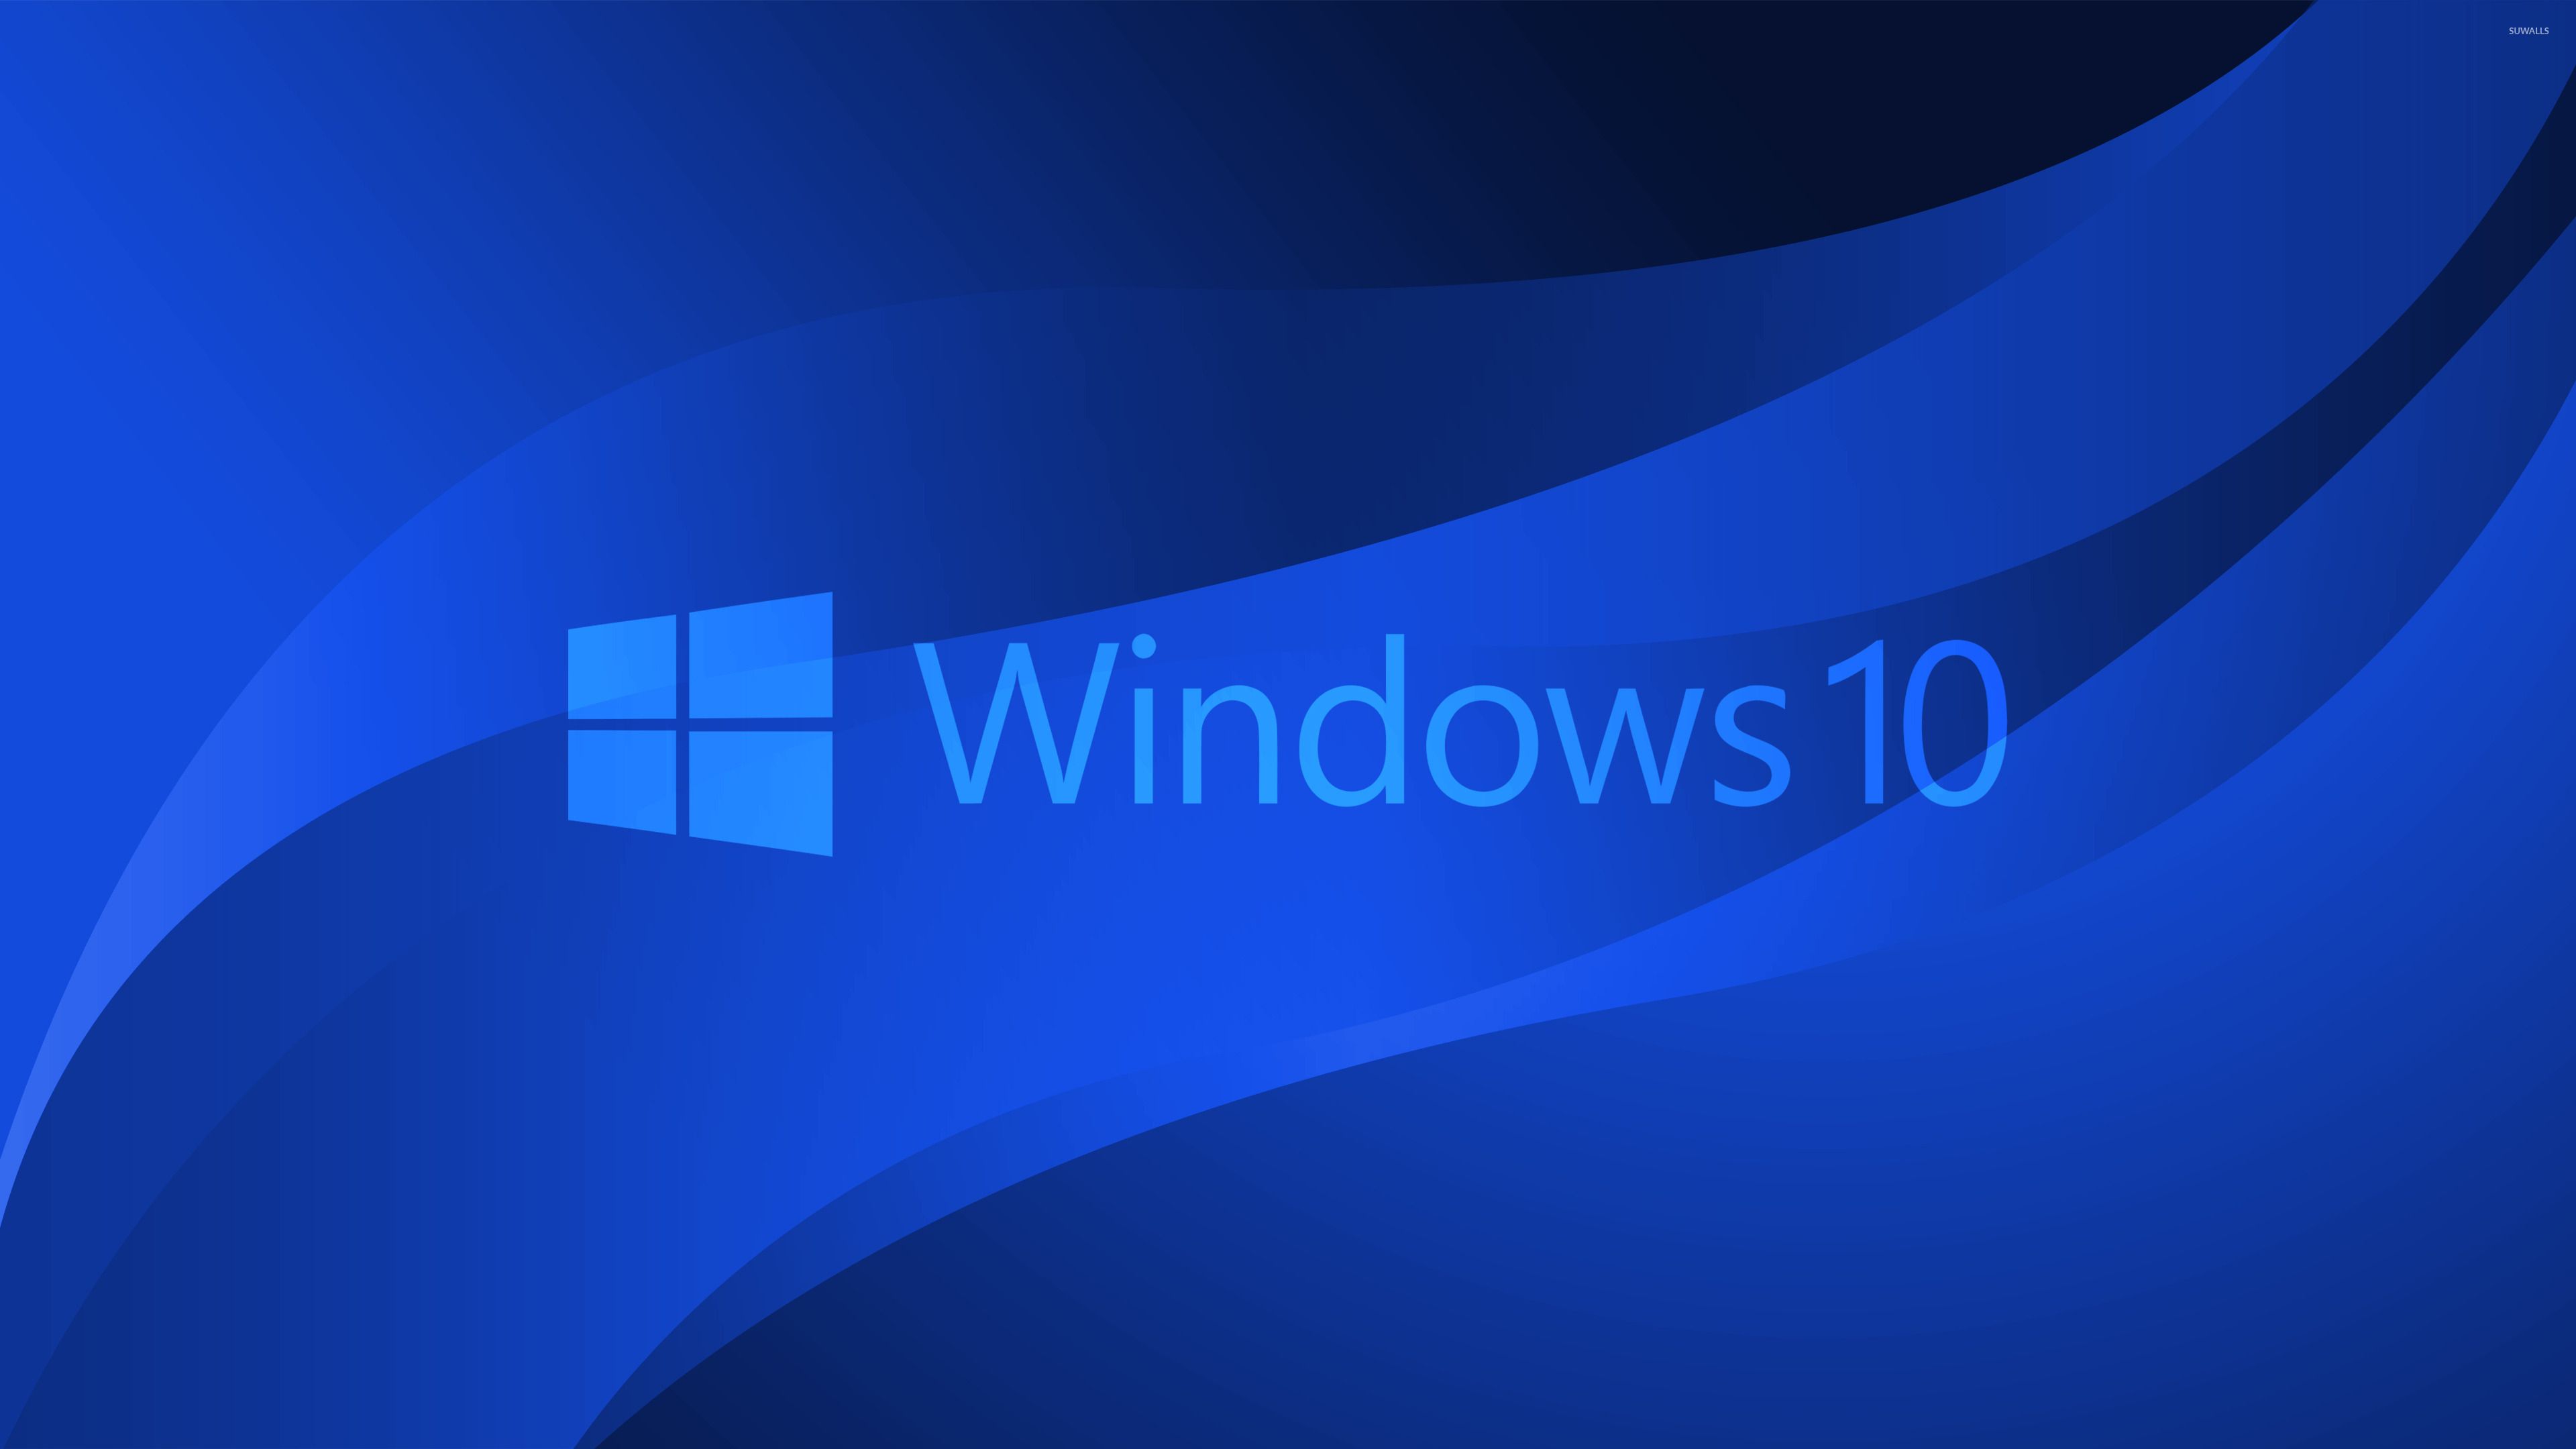 Windows 10 Blue Wallpaper HD